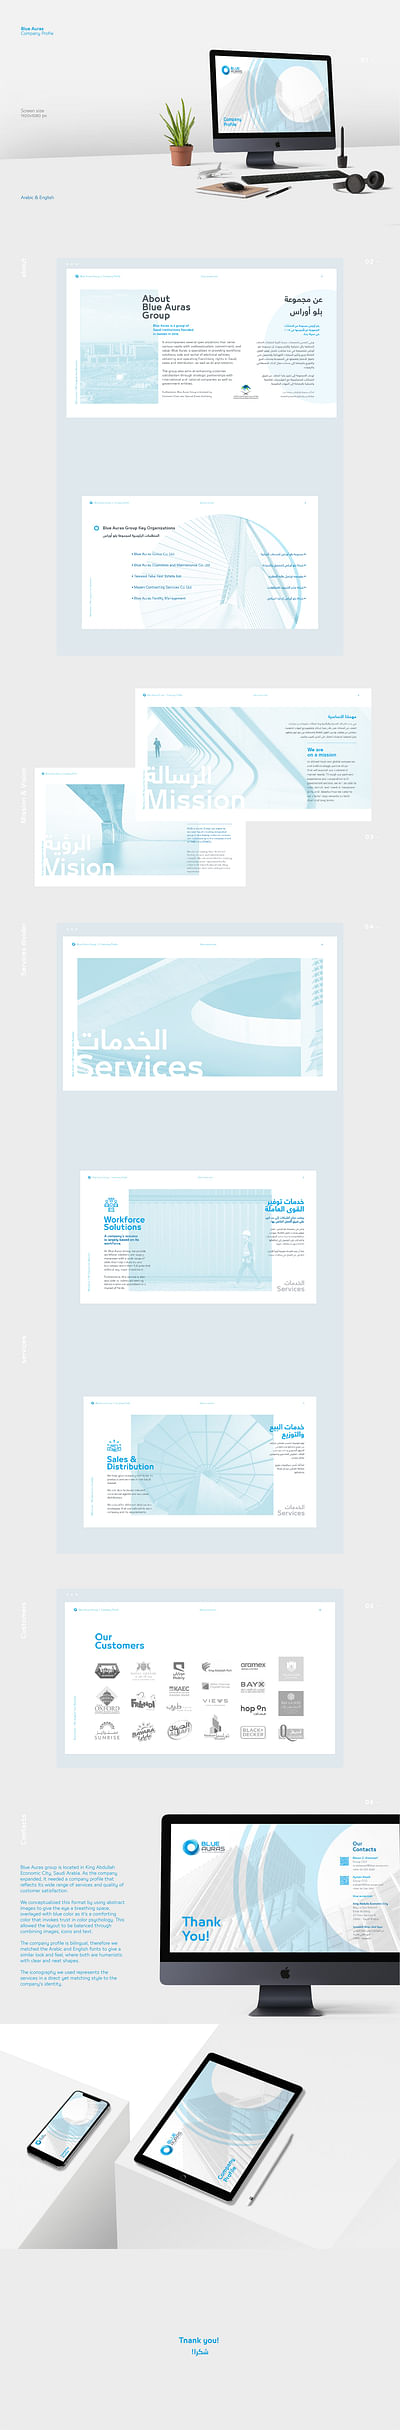 Company Profile - Blue Auras - Image de marque & branding